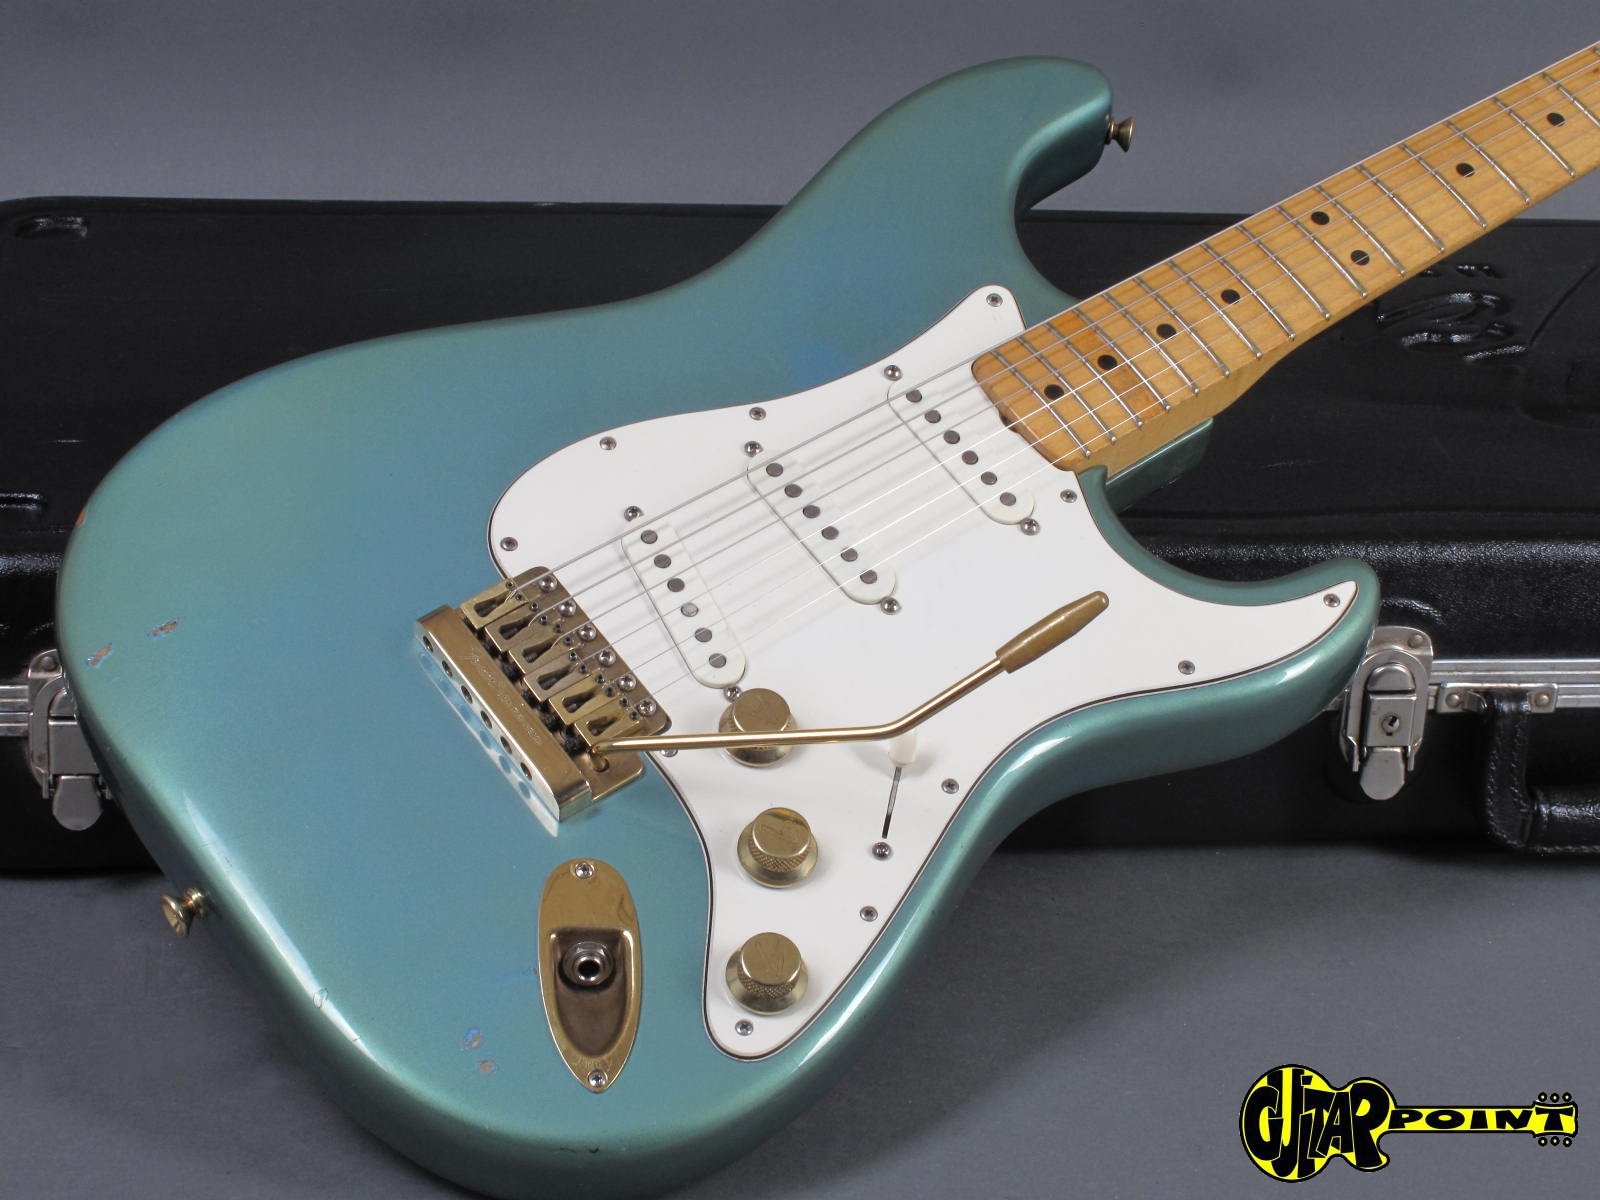 Artistic goodbye law 1980 Fender Stratocaster “The Strat” – Lake Placid Blue” – GuitarPoint